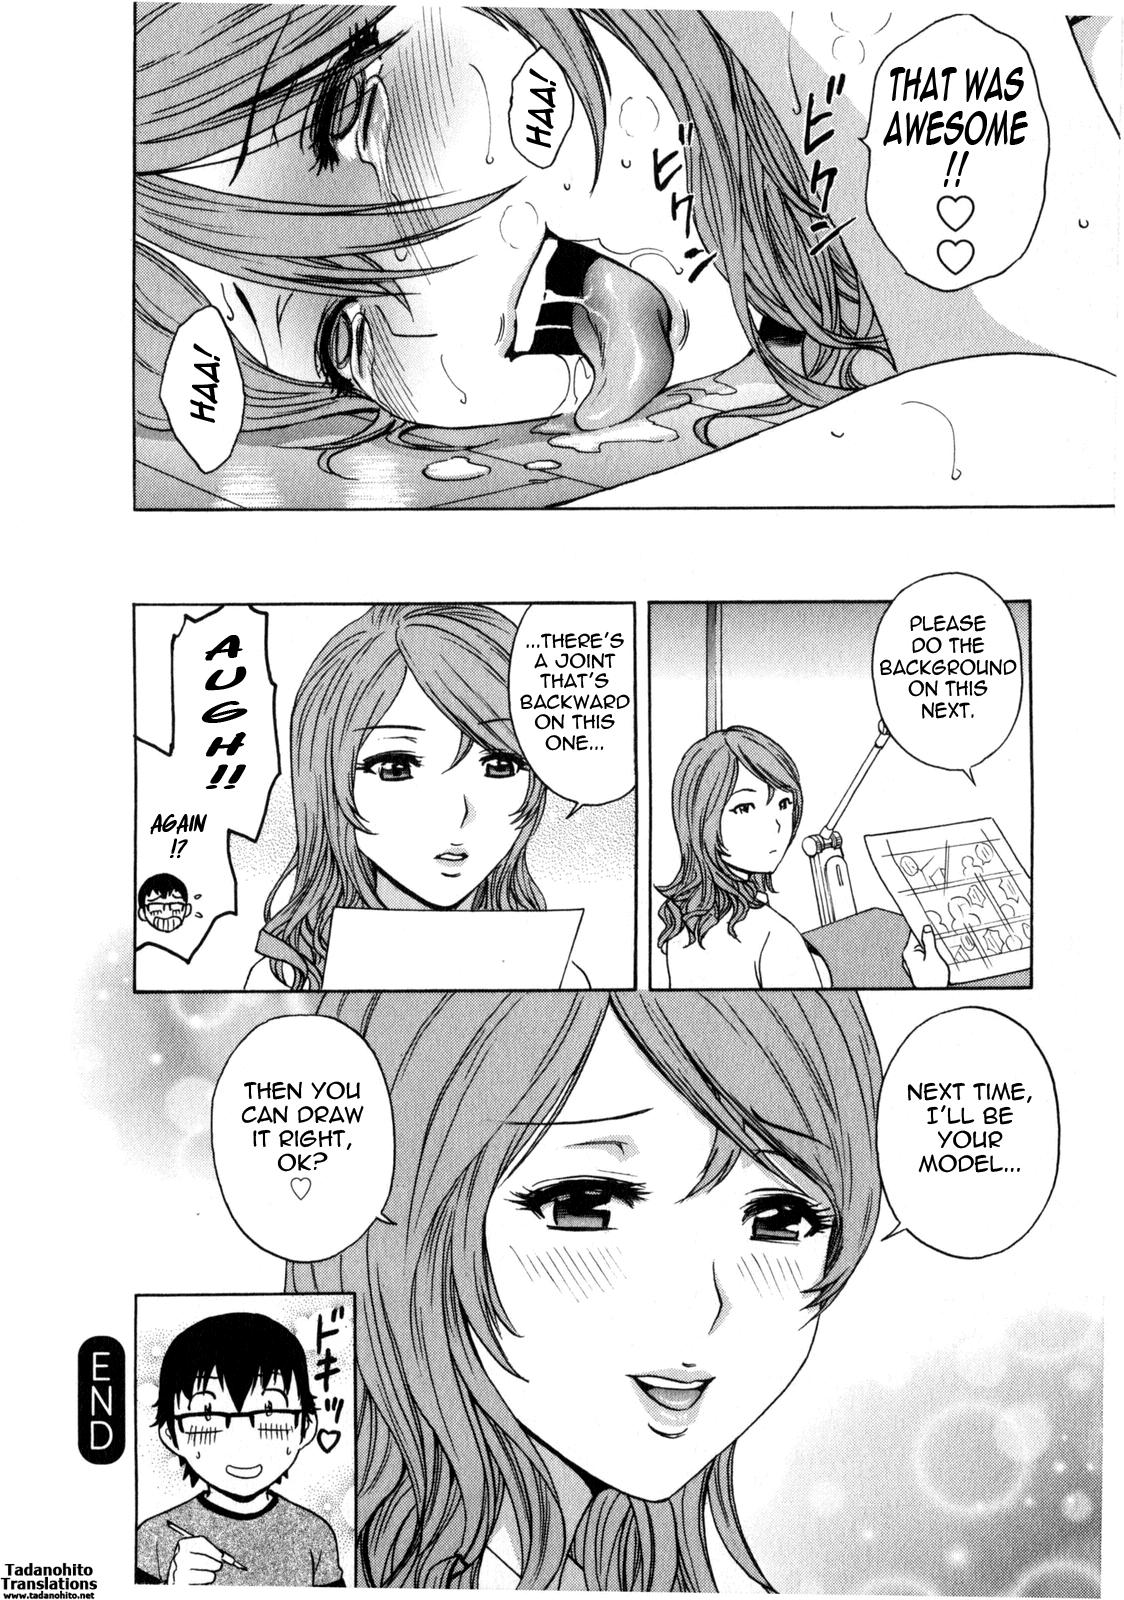 [Hidemaru] Life with Married Women Just Like a Manga 2 - Ch. 1-4 [English] {Tadanohito} 44